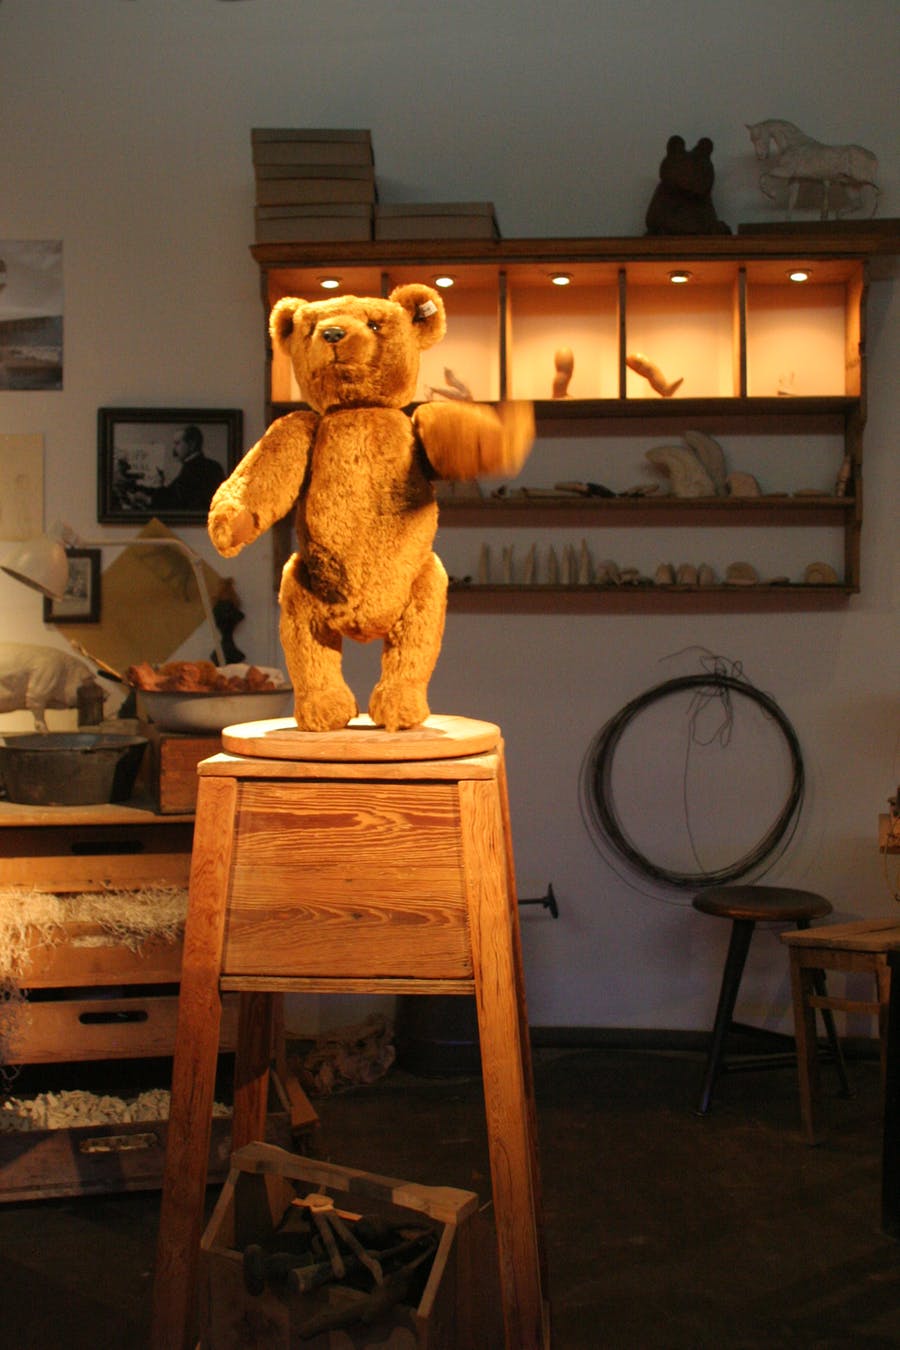 Steiff Louis Vuitton Teddy Bear sold at an auction for $2.1